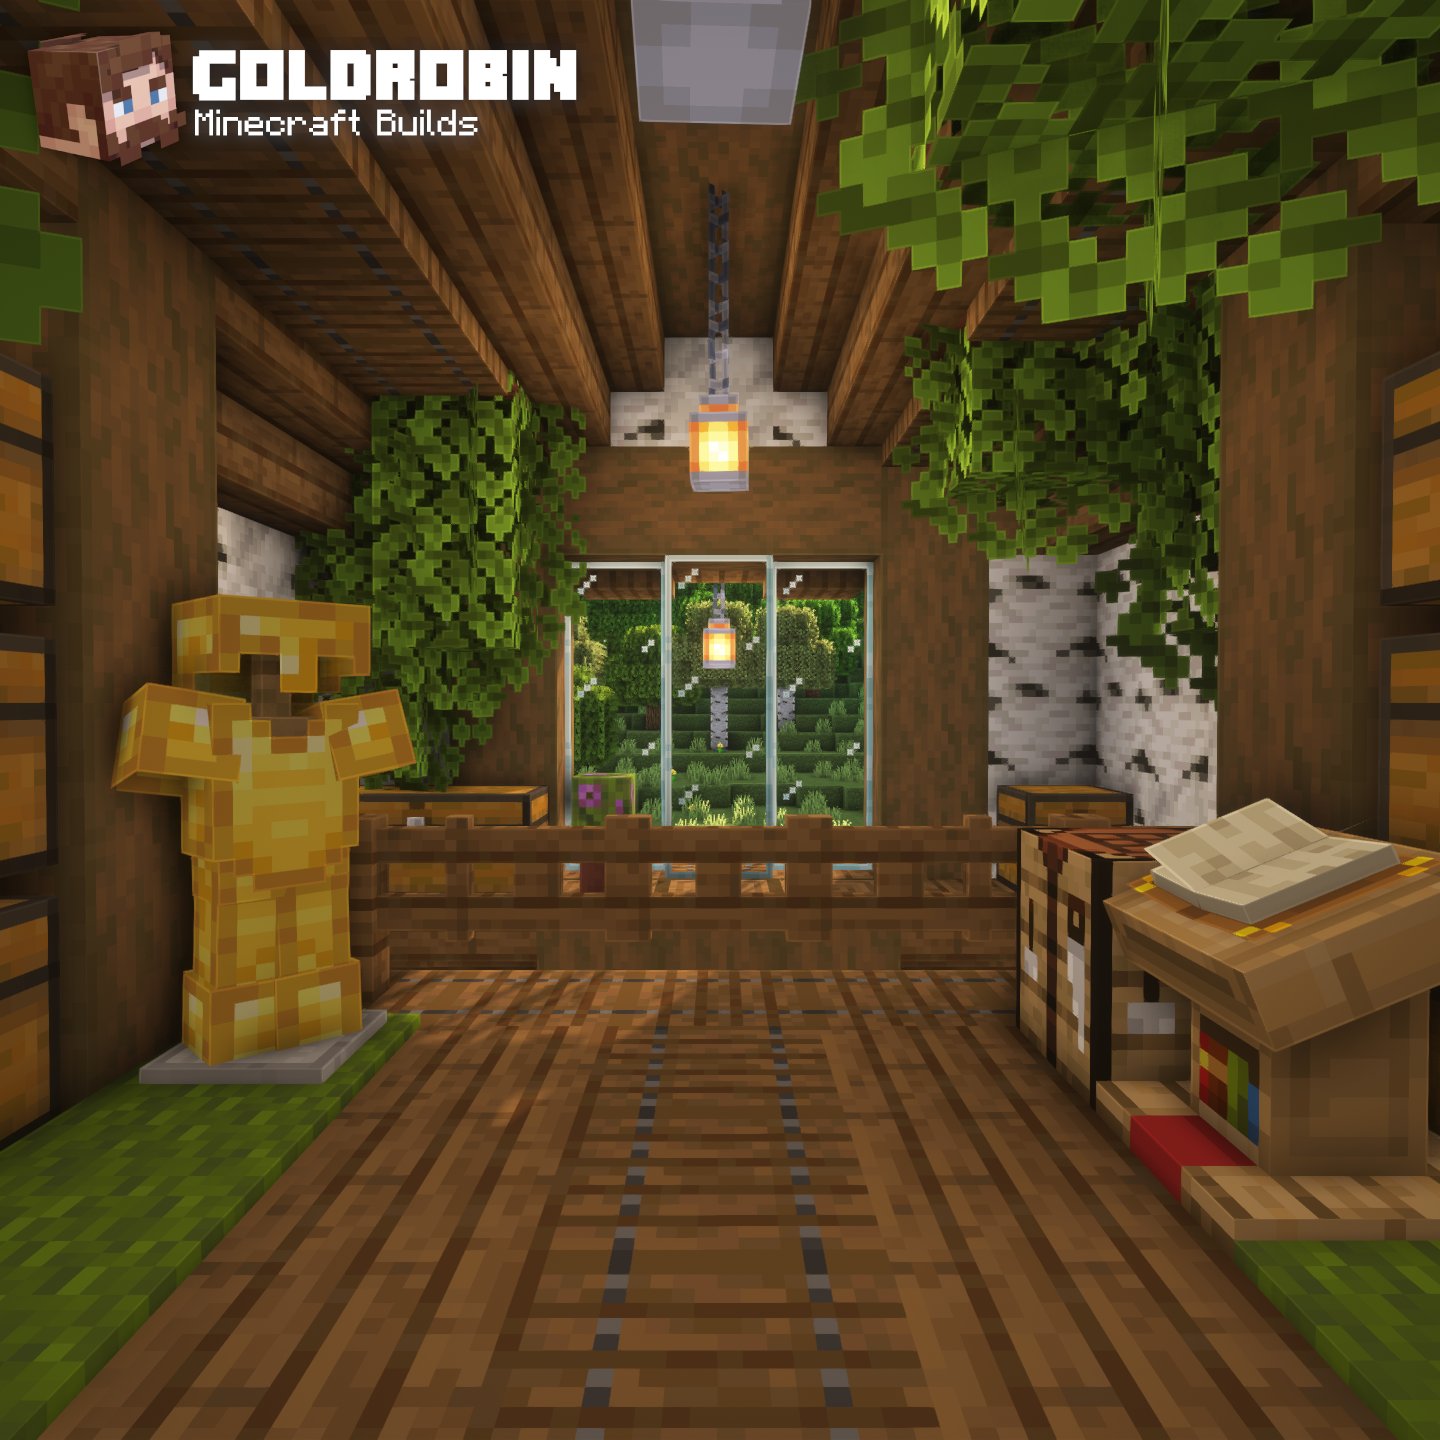 Goldrobin on X: I built 3 Working Defense Towers! 🔥 #Minecraft